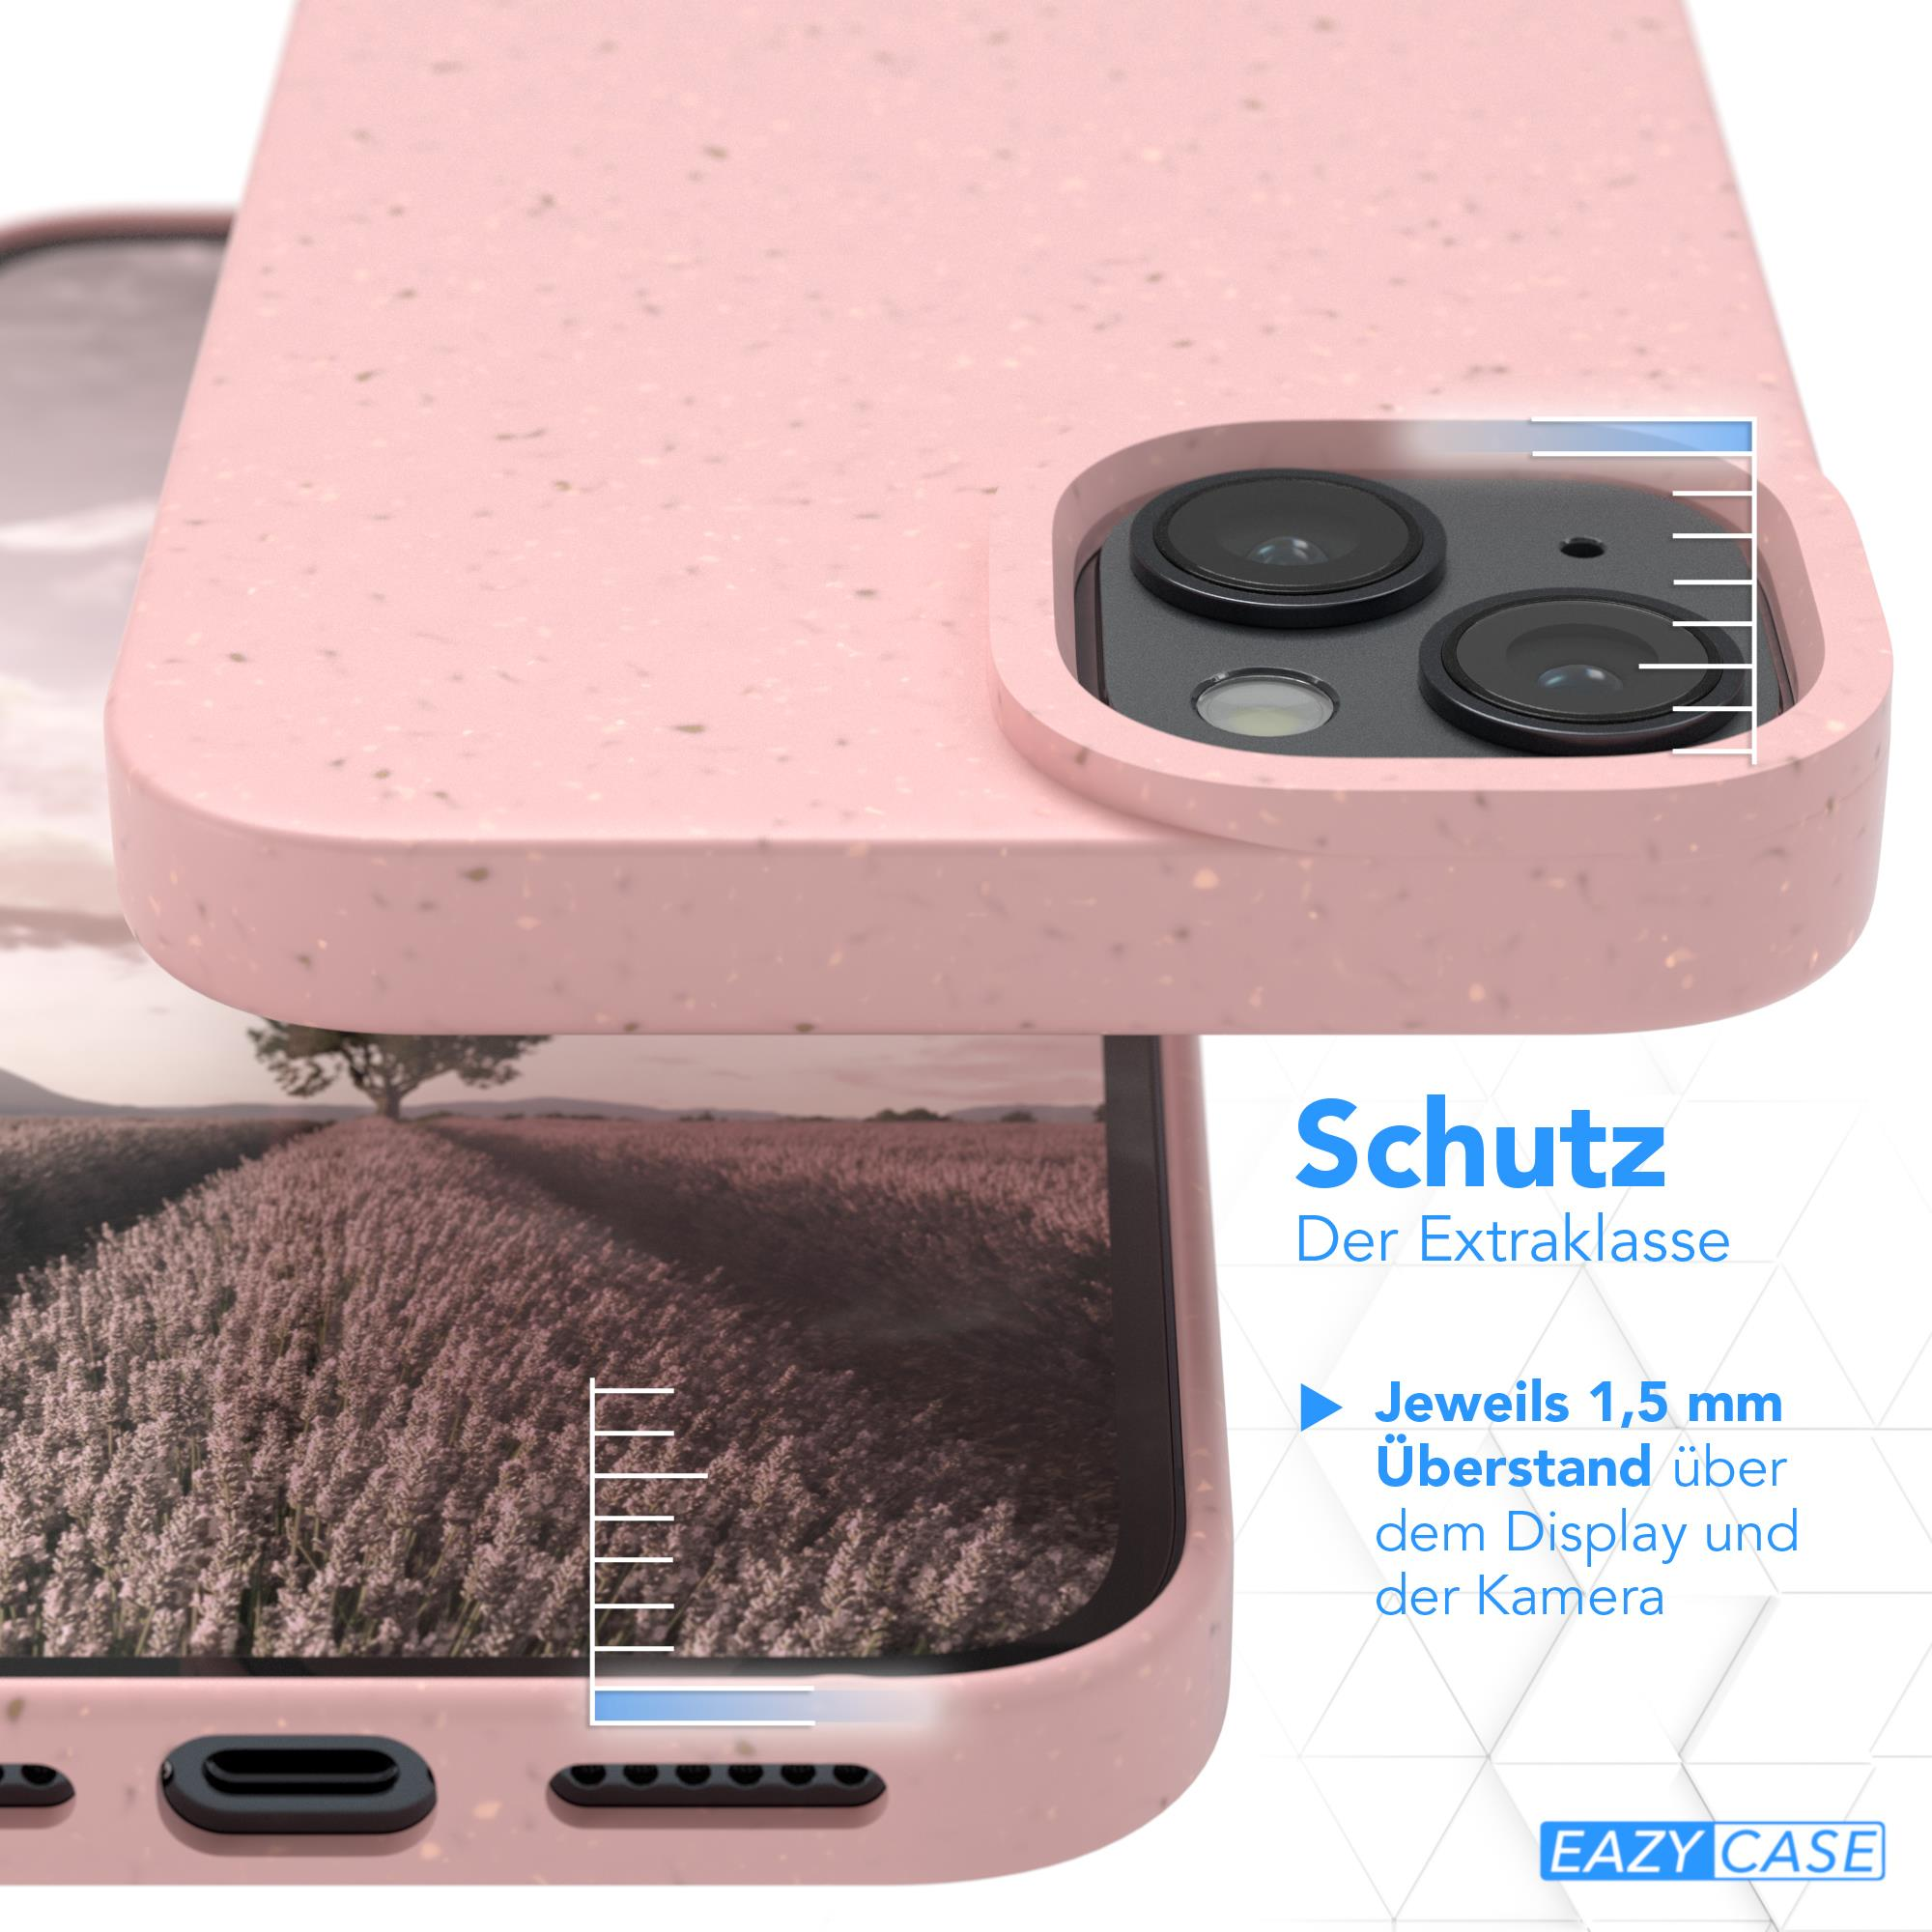 EAZY Pink Bumper, 14 iPhone CASE Apple, Biocase, Plus,